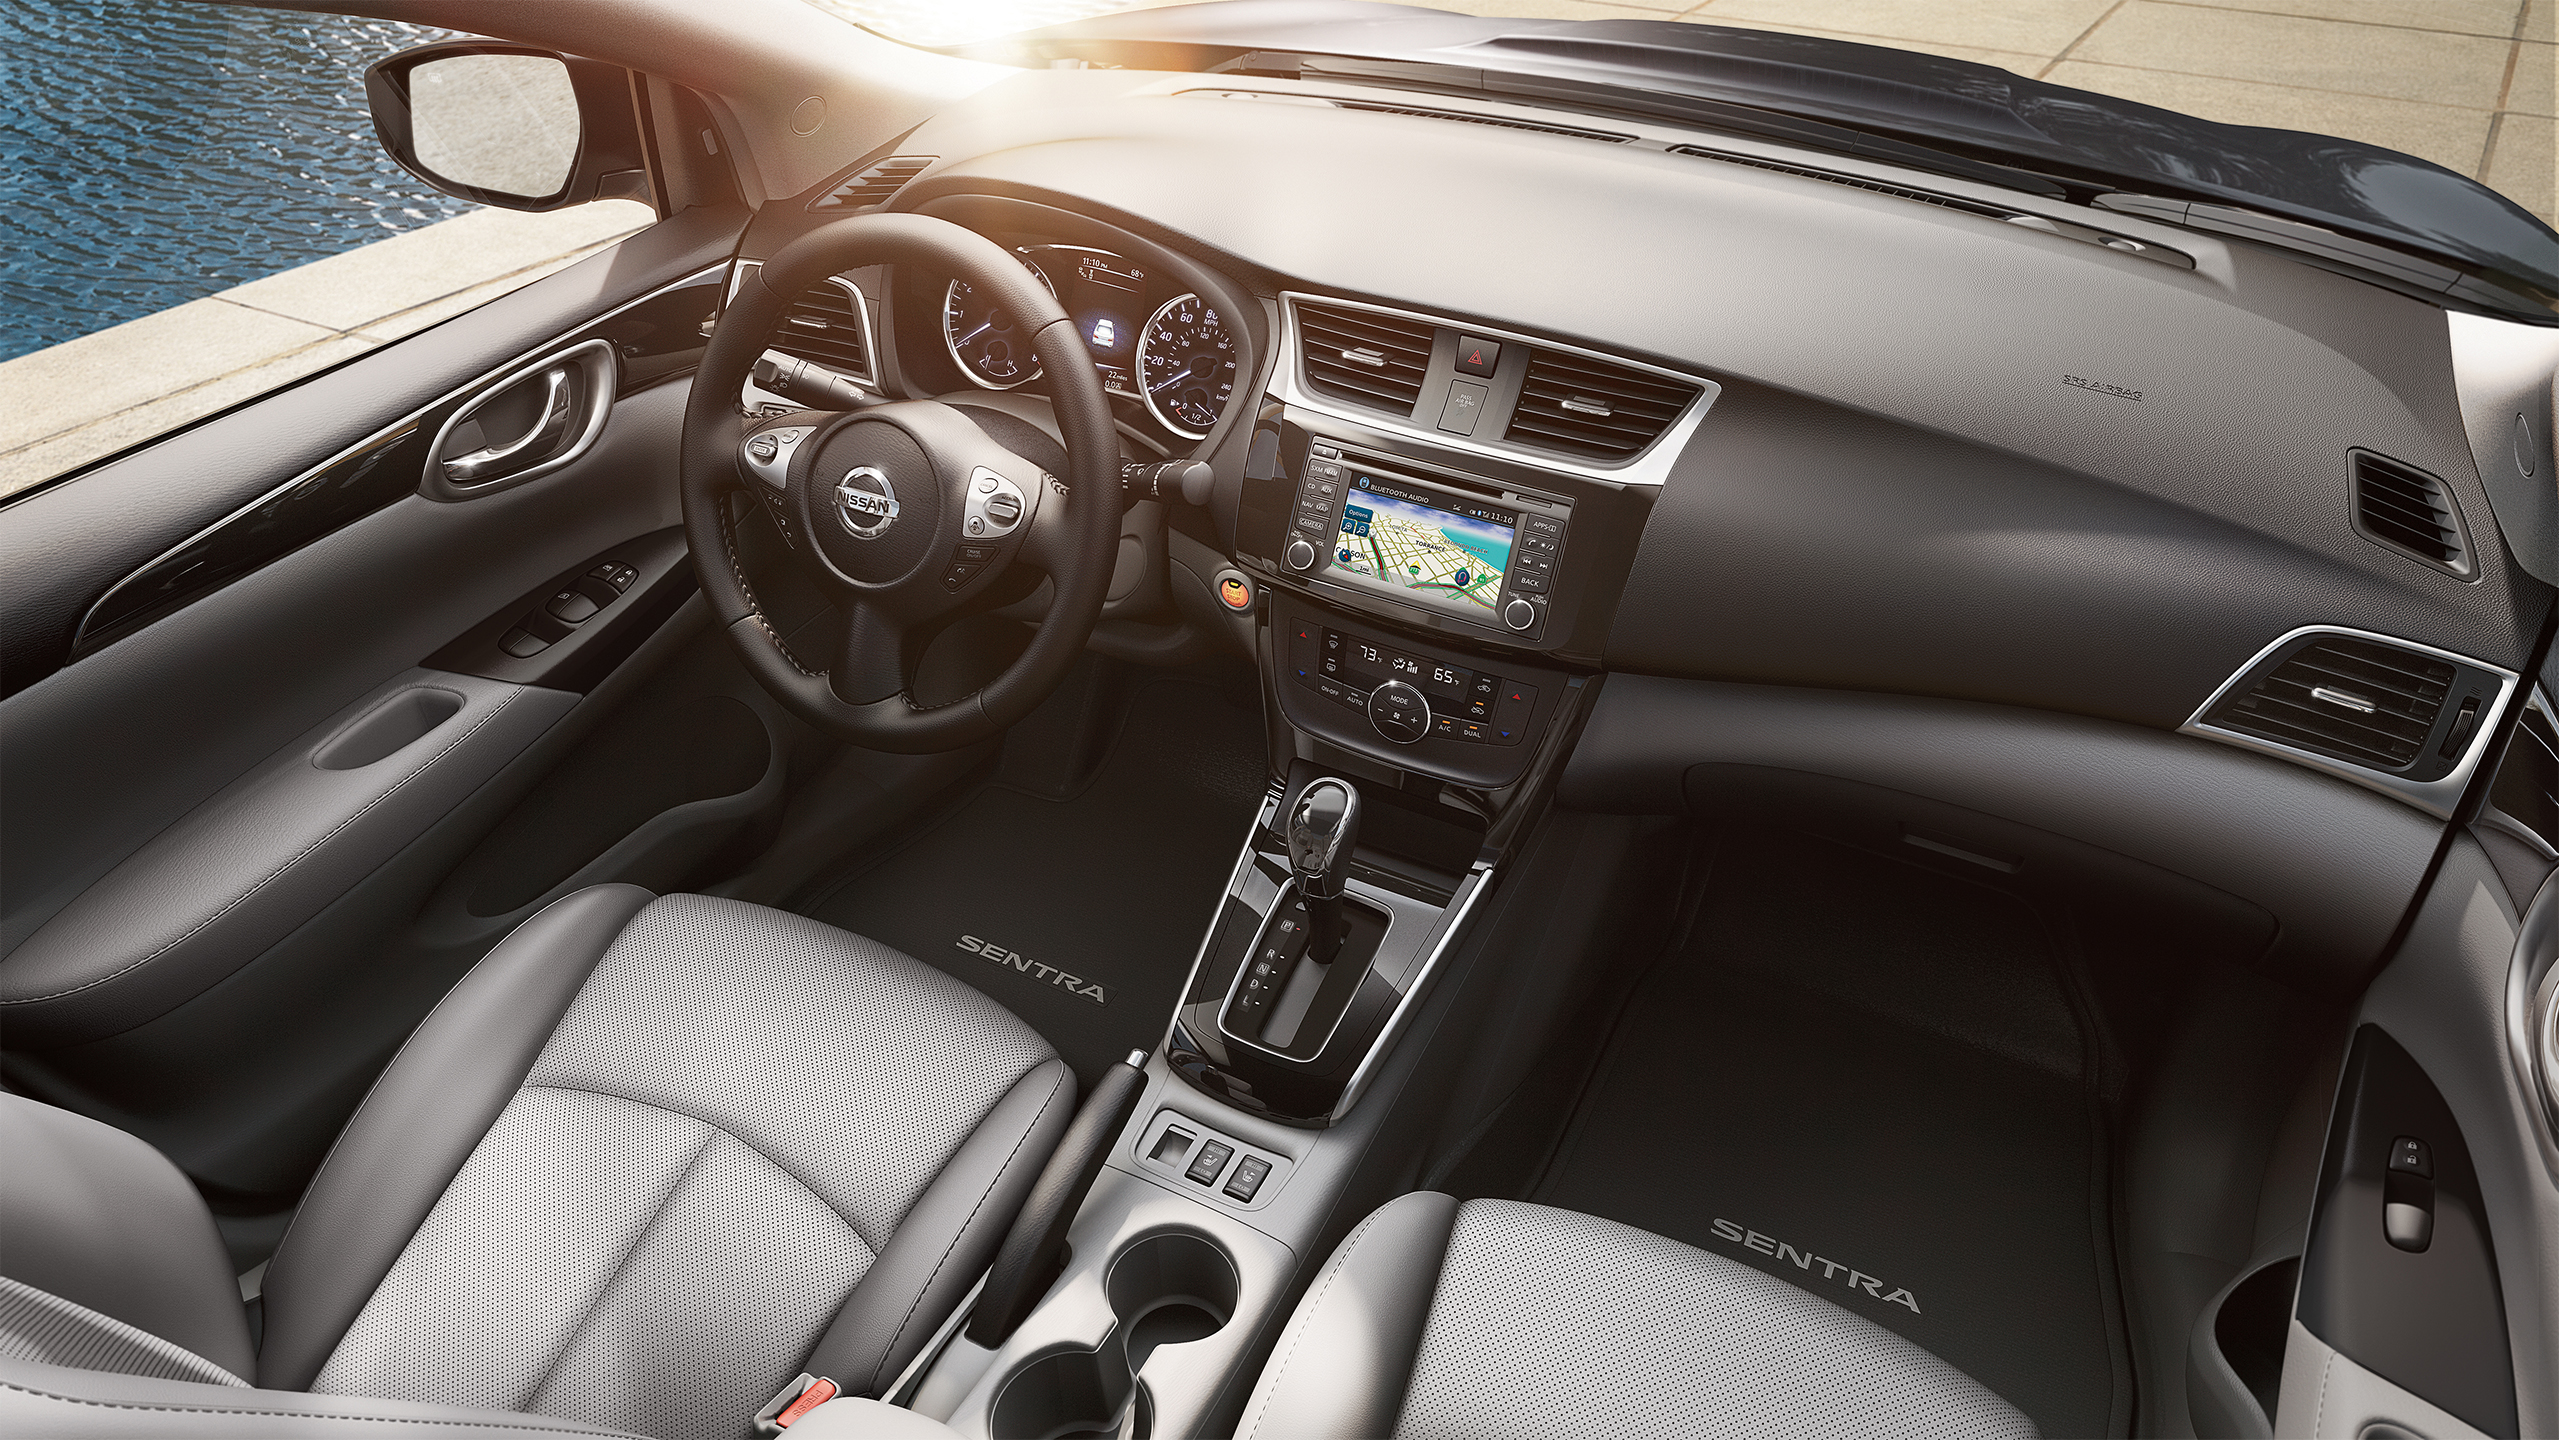 2016 Nissan Sentra Interior Full View